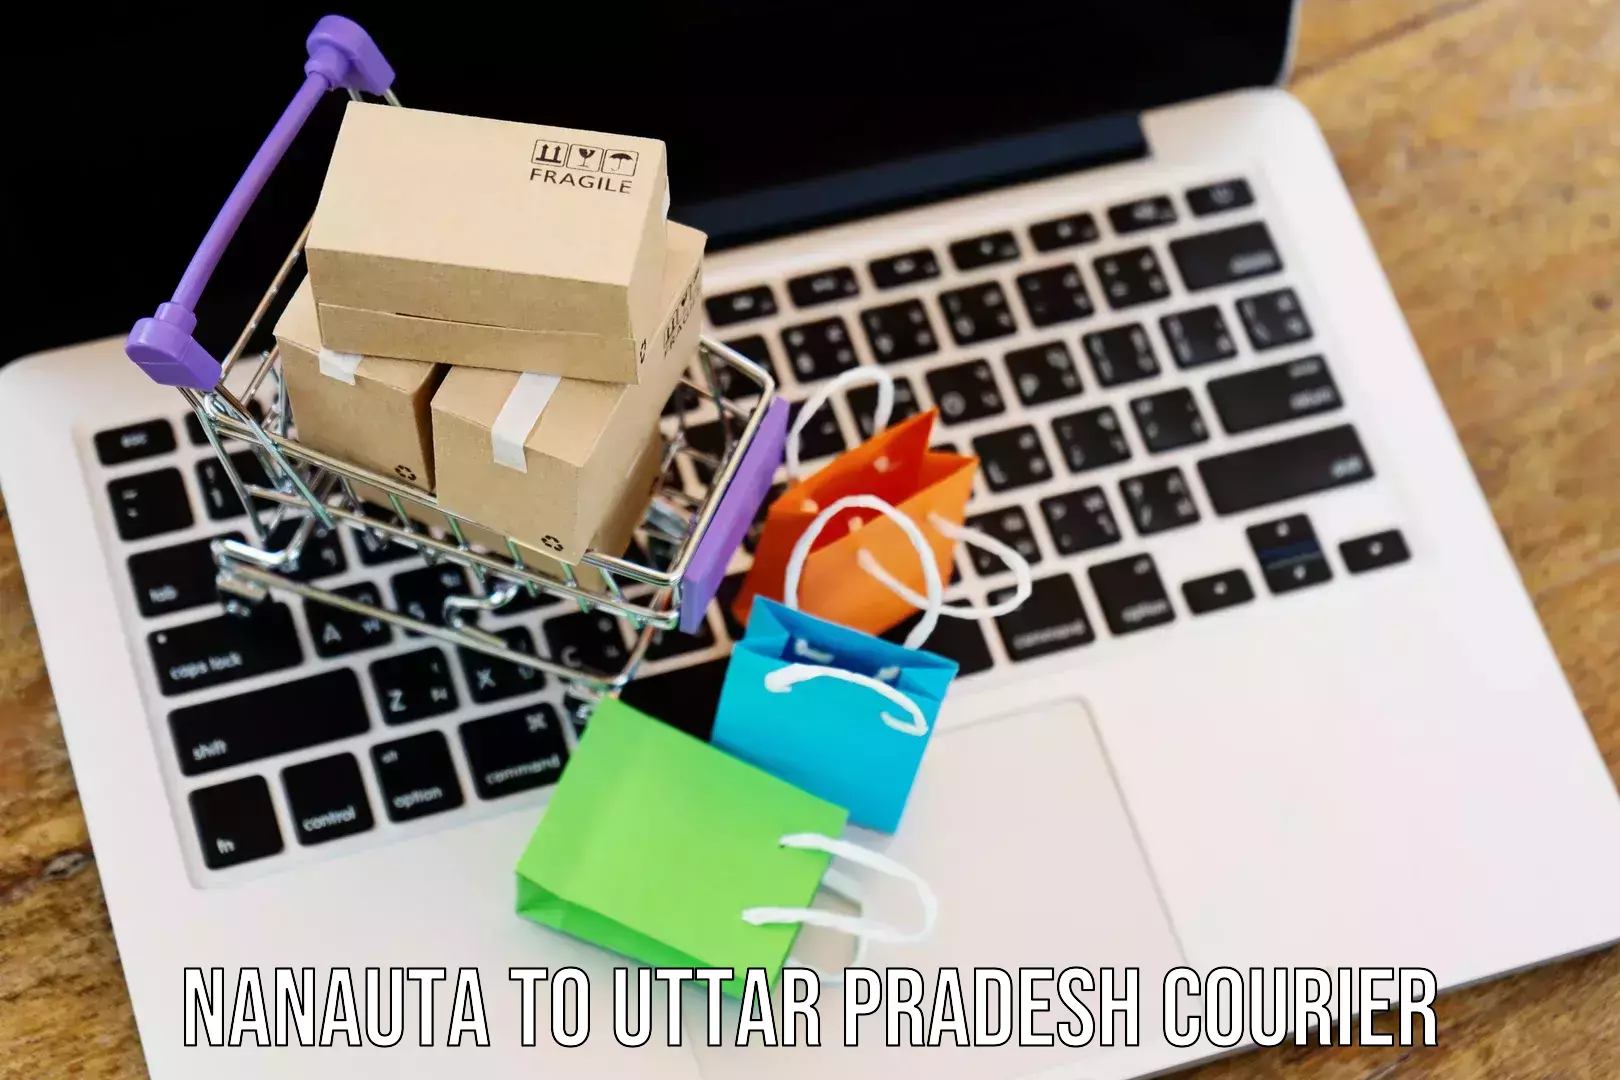 Smart courier technologies Nanauta to Uttar Pradesh